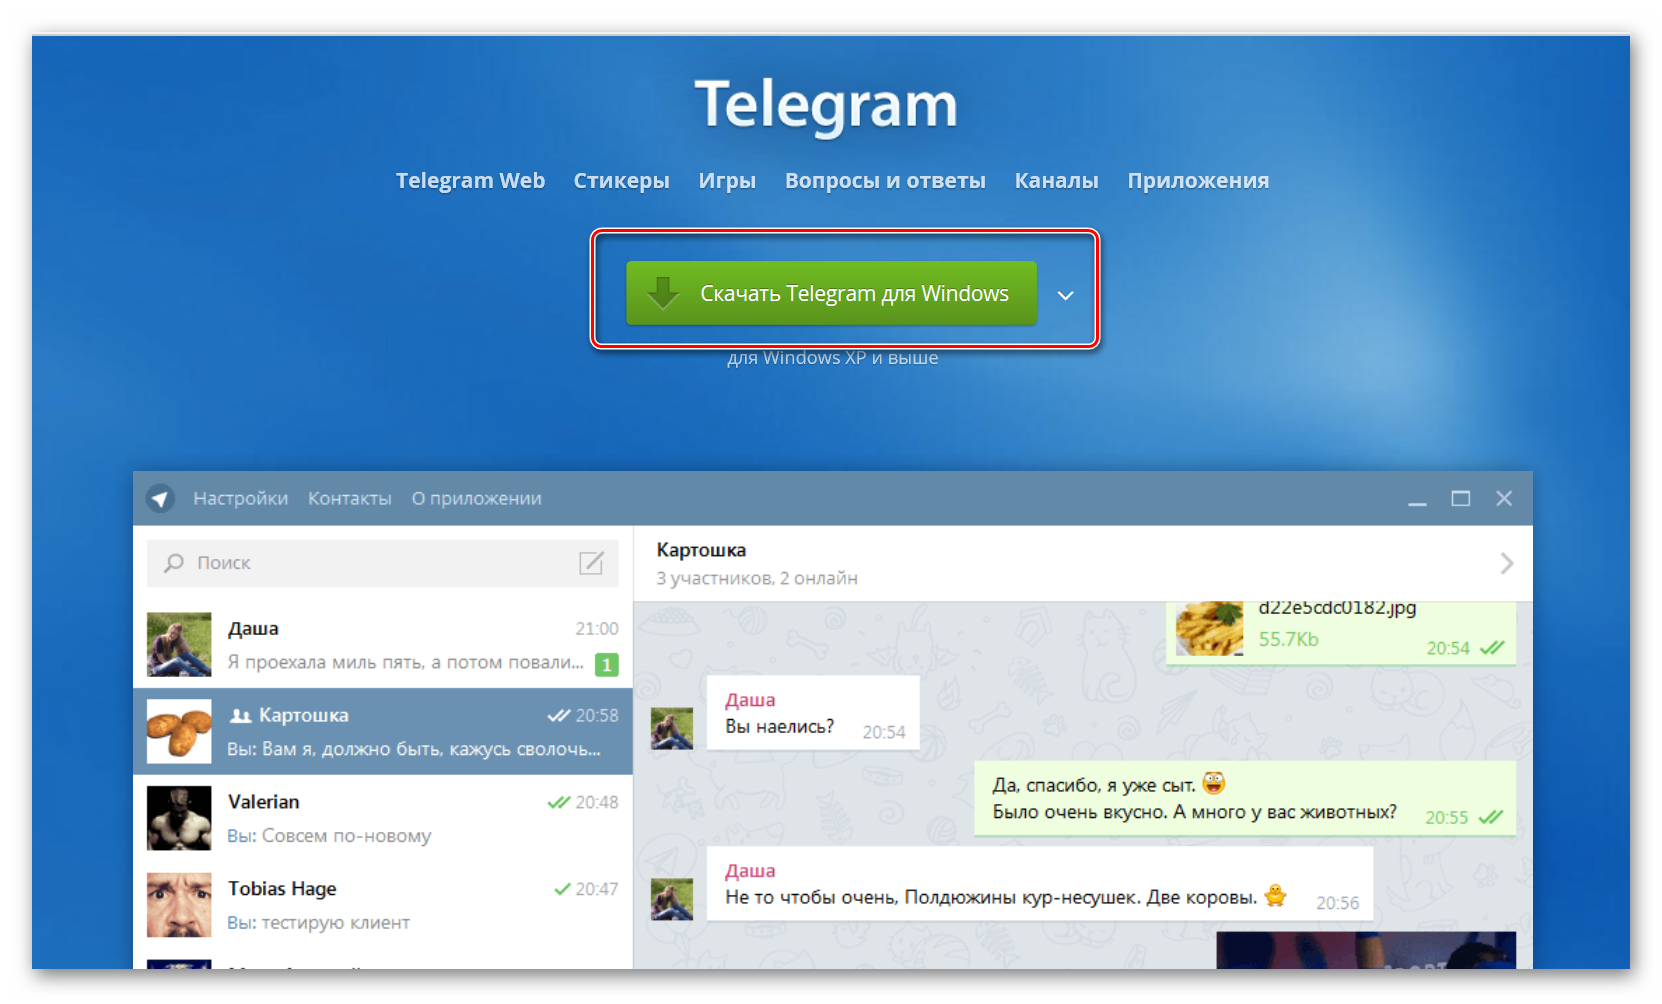 Тг веб войти. Telegram profil. Профиль в телеграмме. Телеграмм web. Веб приложение в телеграм.